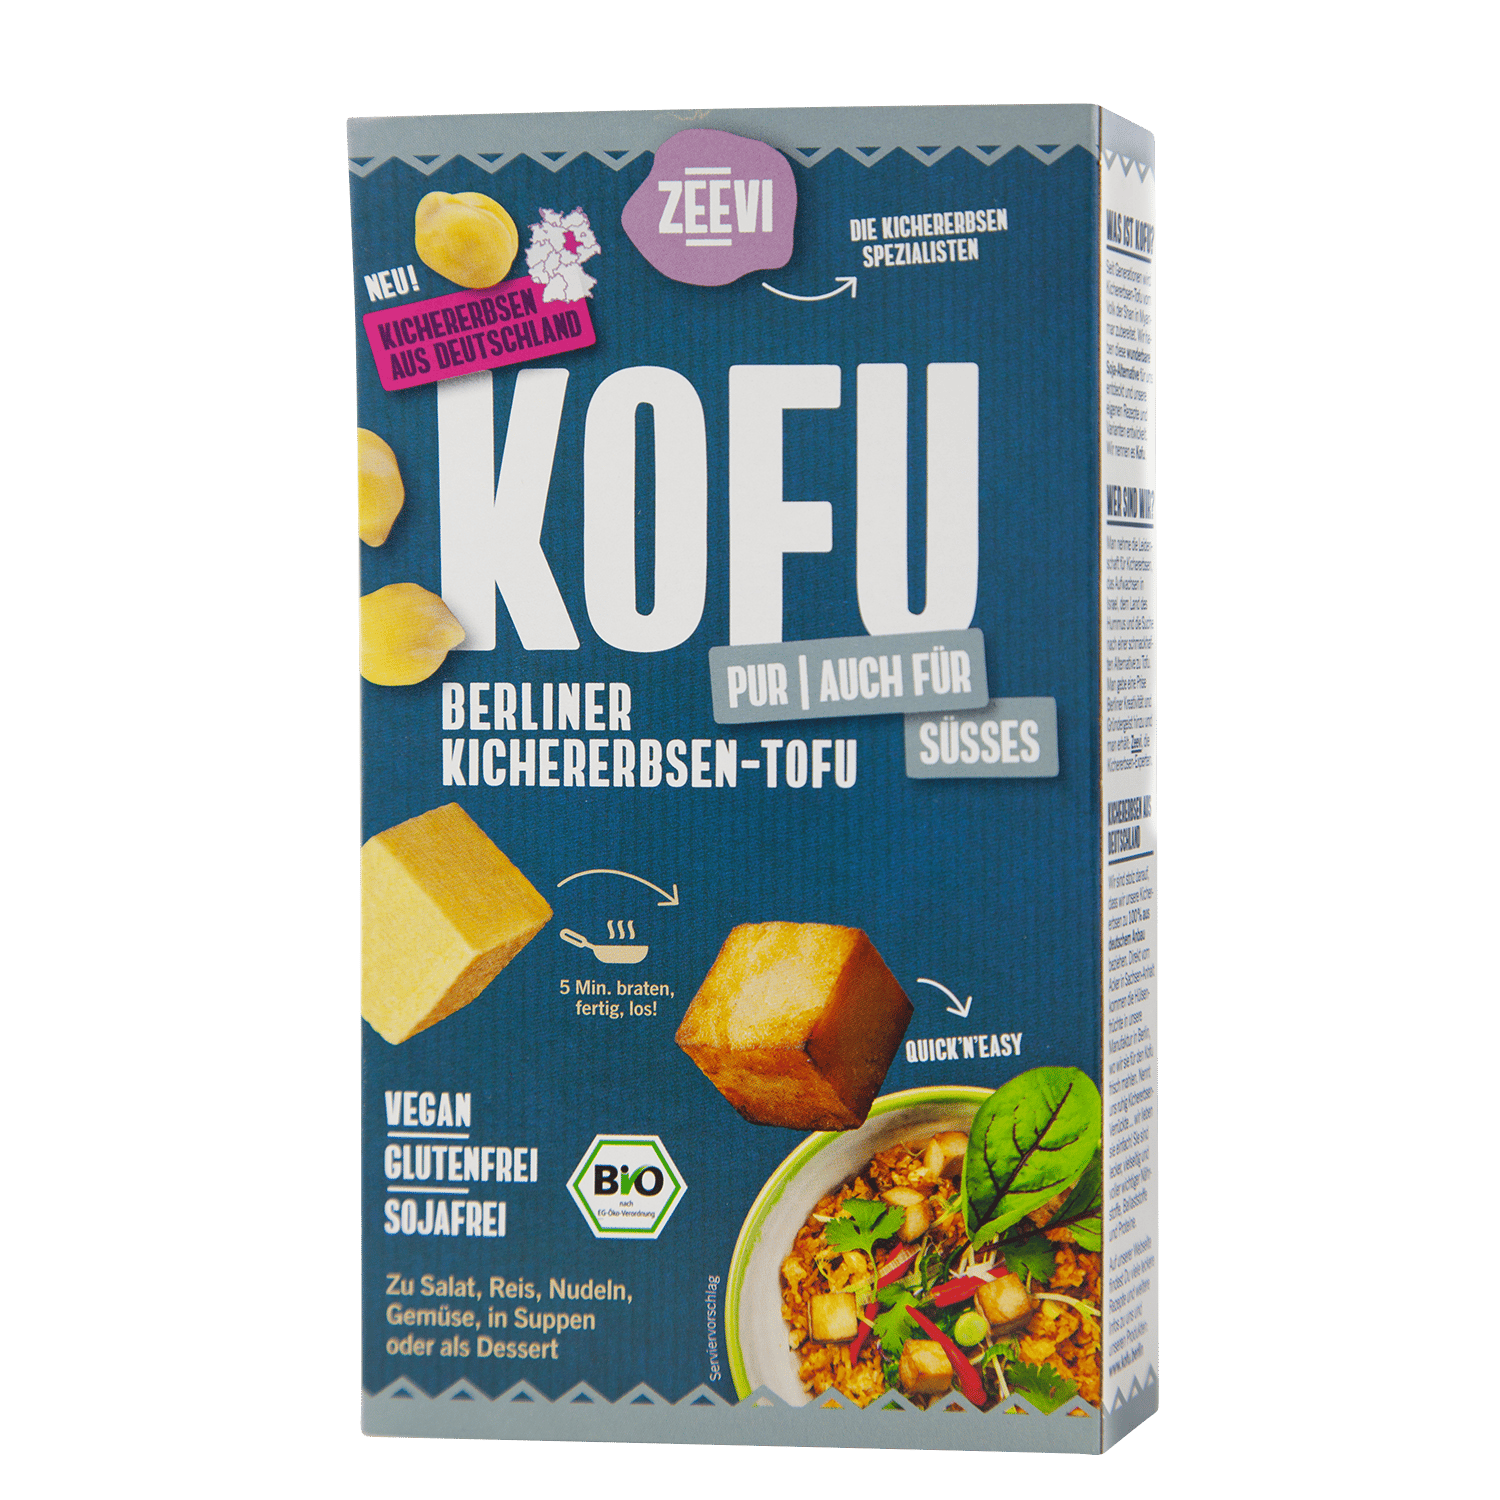 Kofu Pure, Organic, 200g